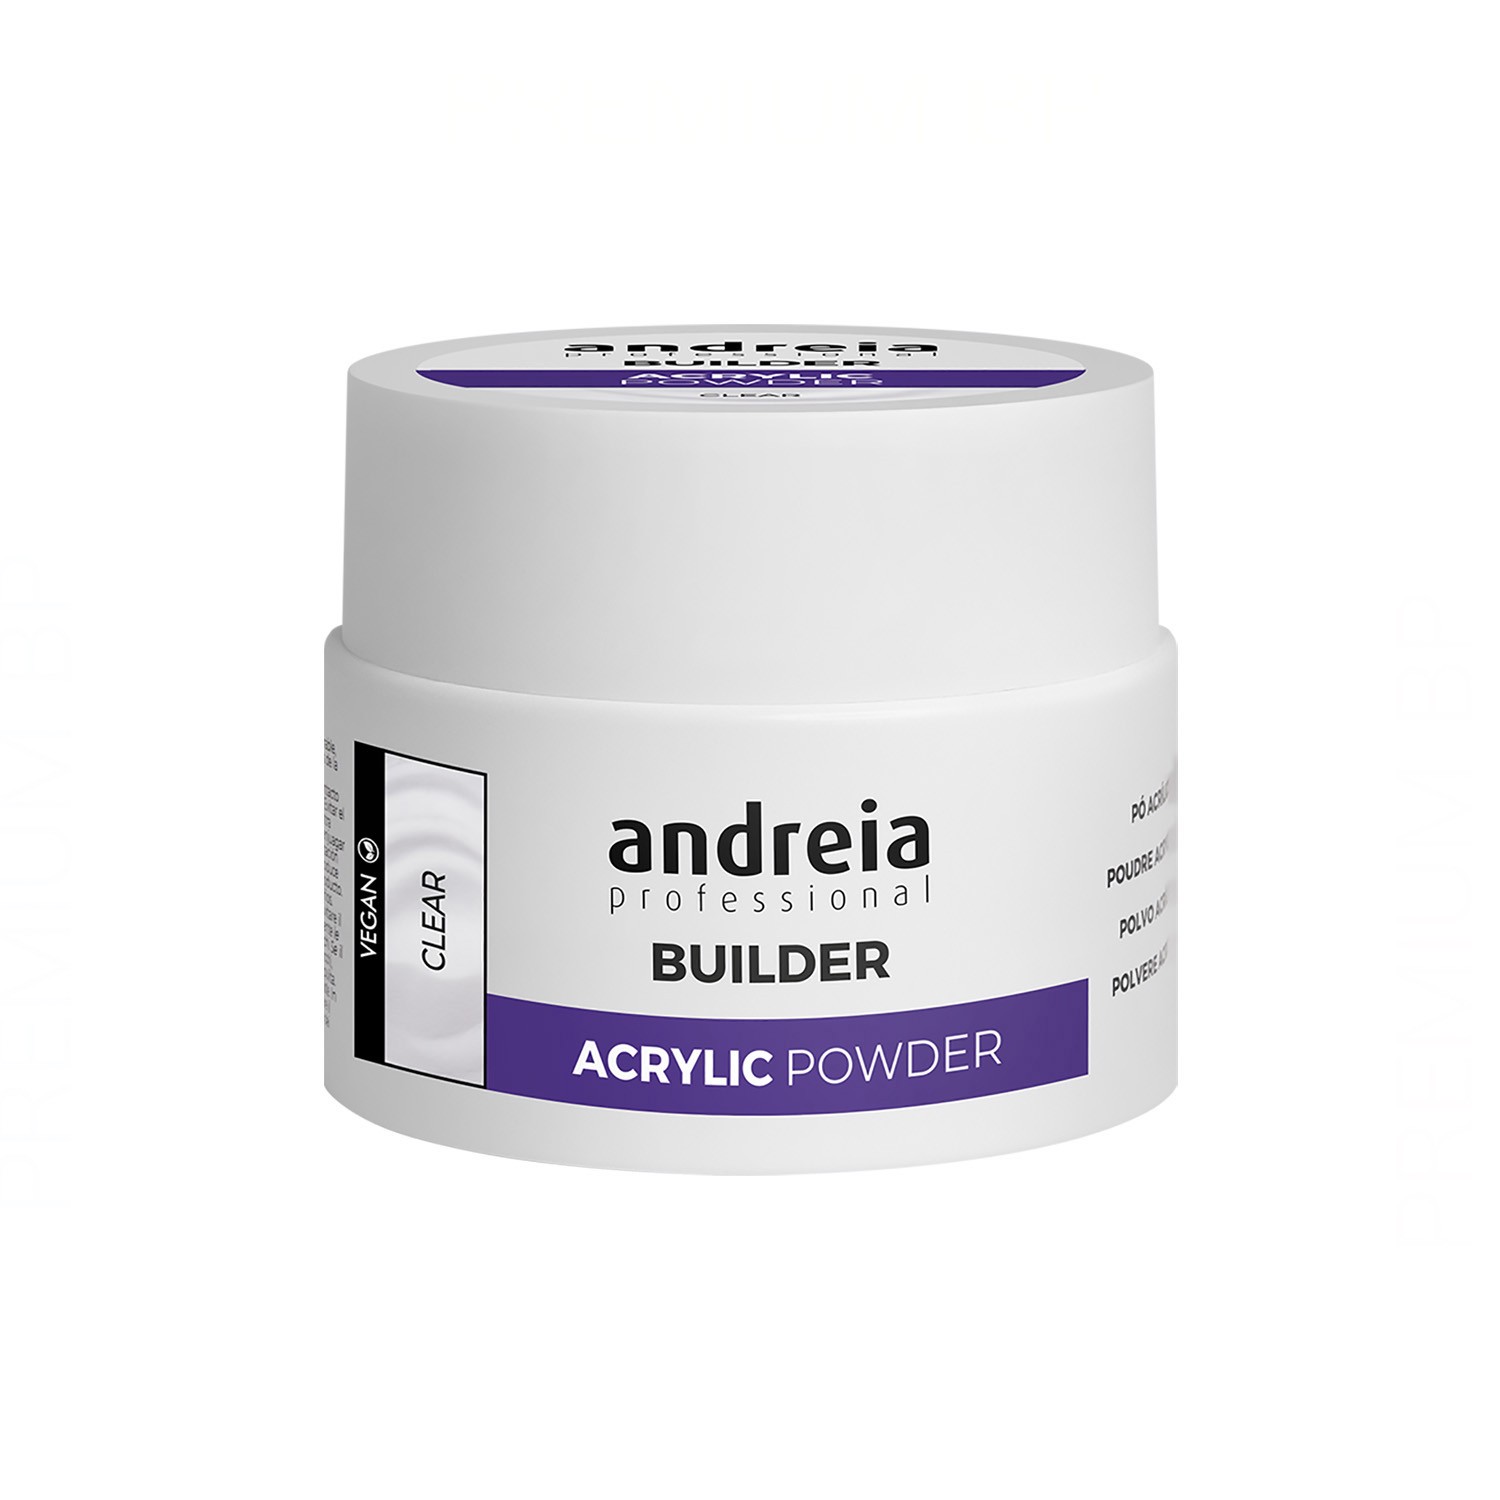 Andreia Professional Builder Acrylic Powder Polvos Acrilicos Clear 35 g